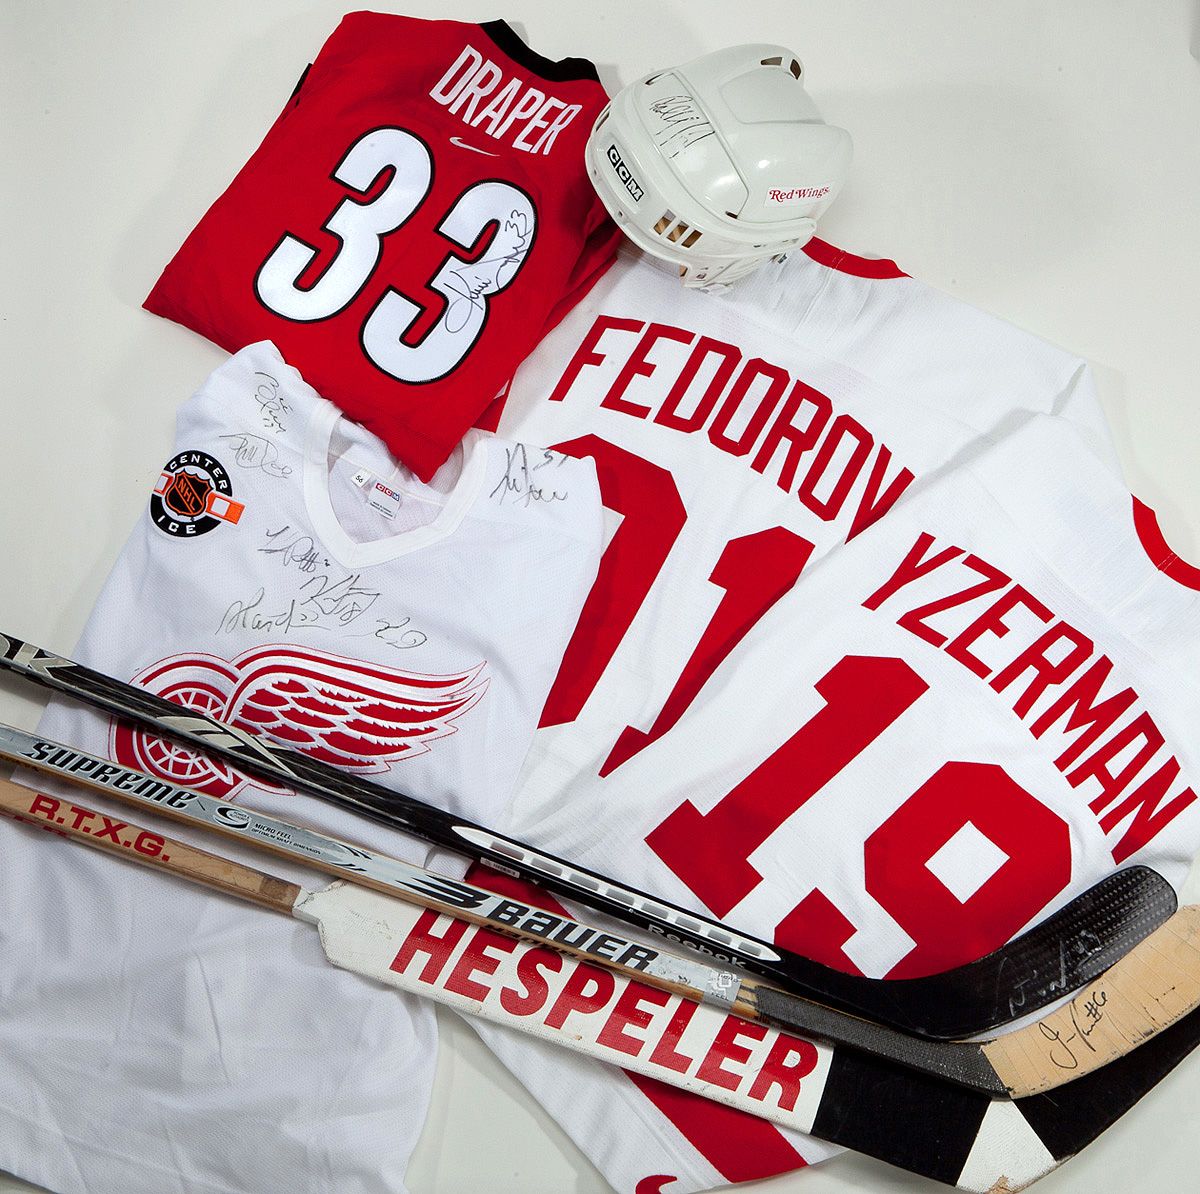 Steve Yzerman Autographed Detroit Red Wings Red CCM Jersey